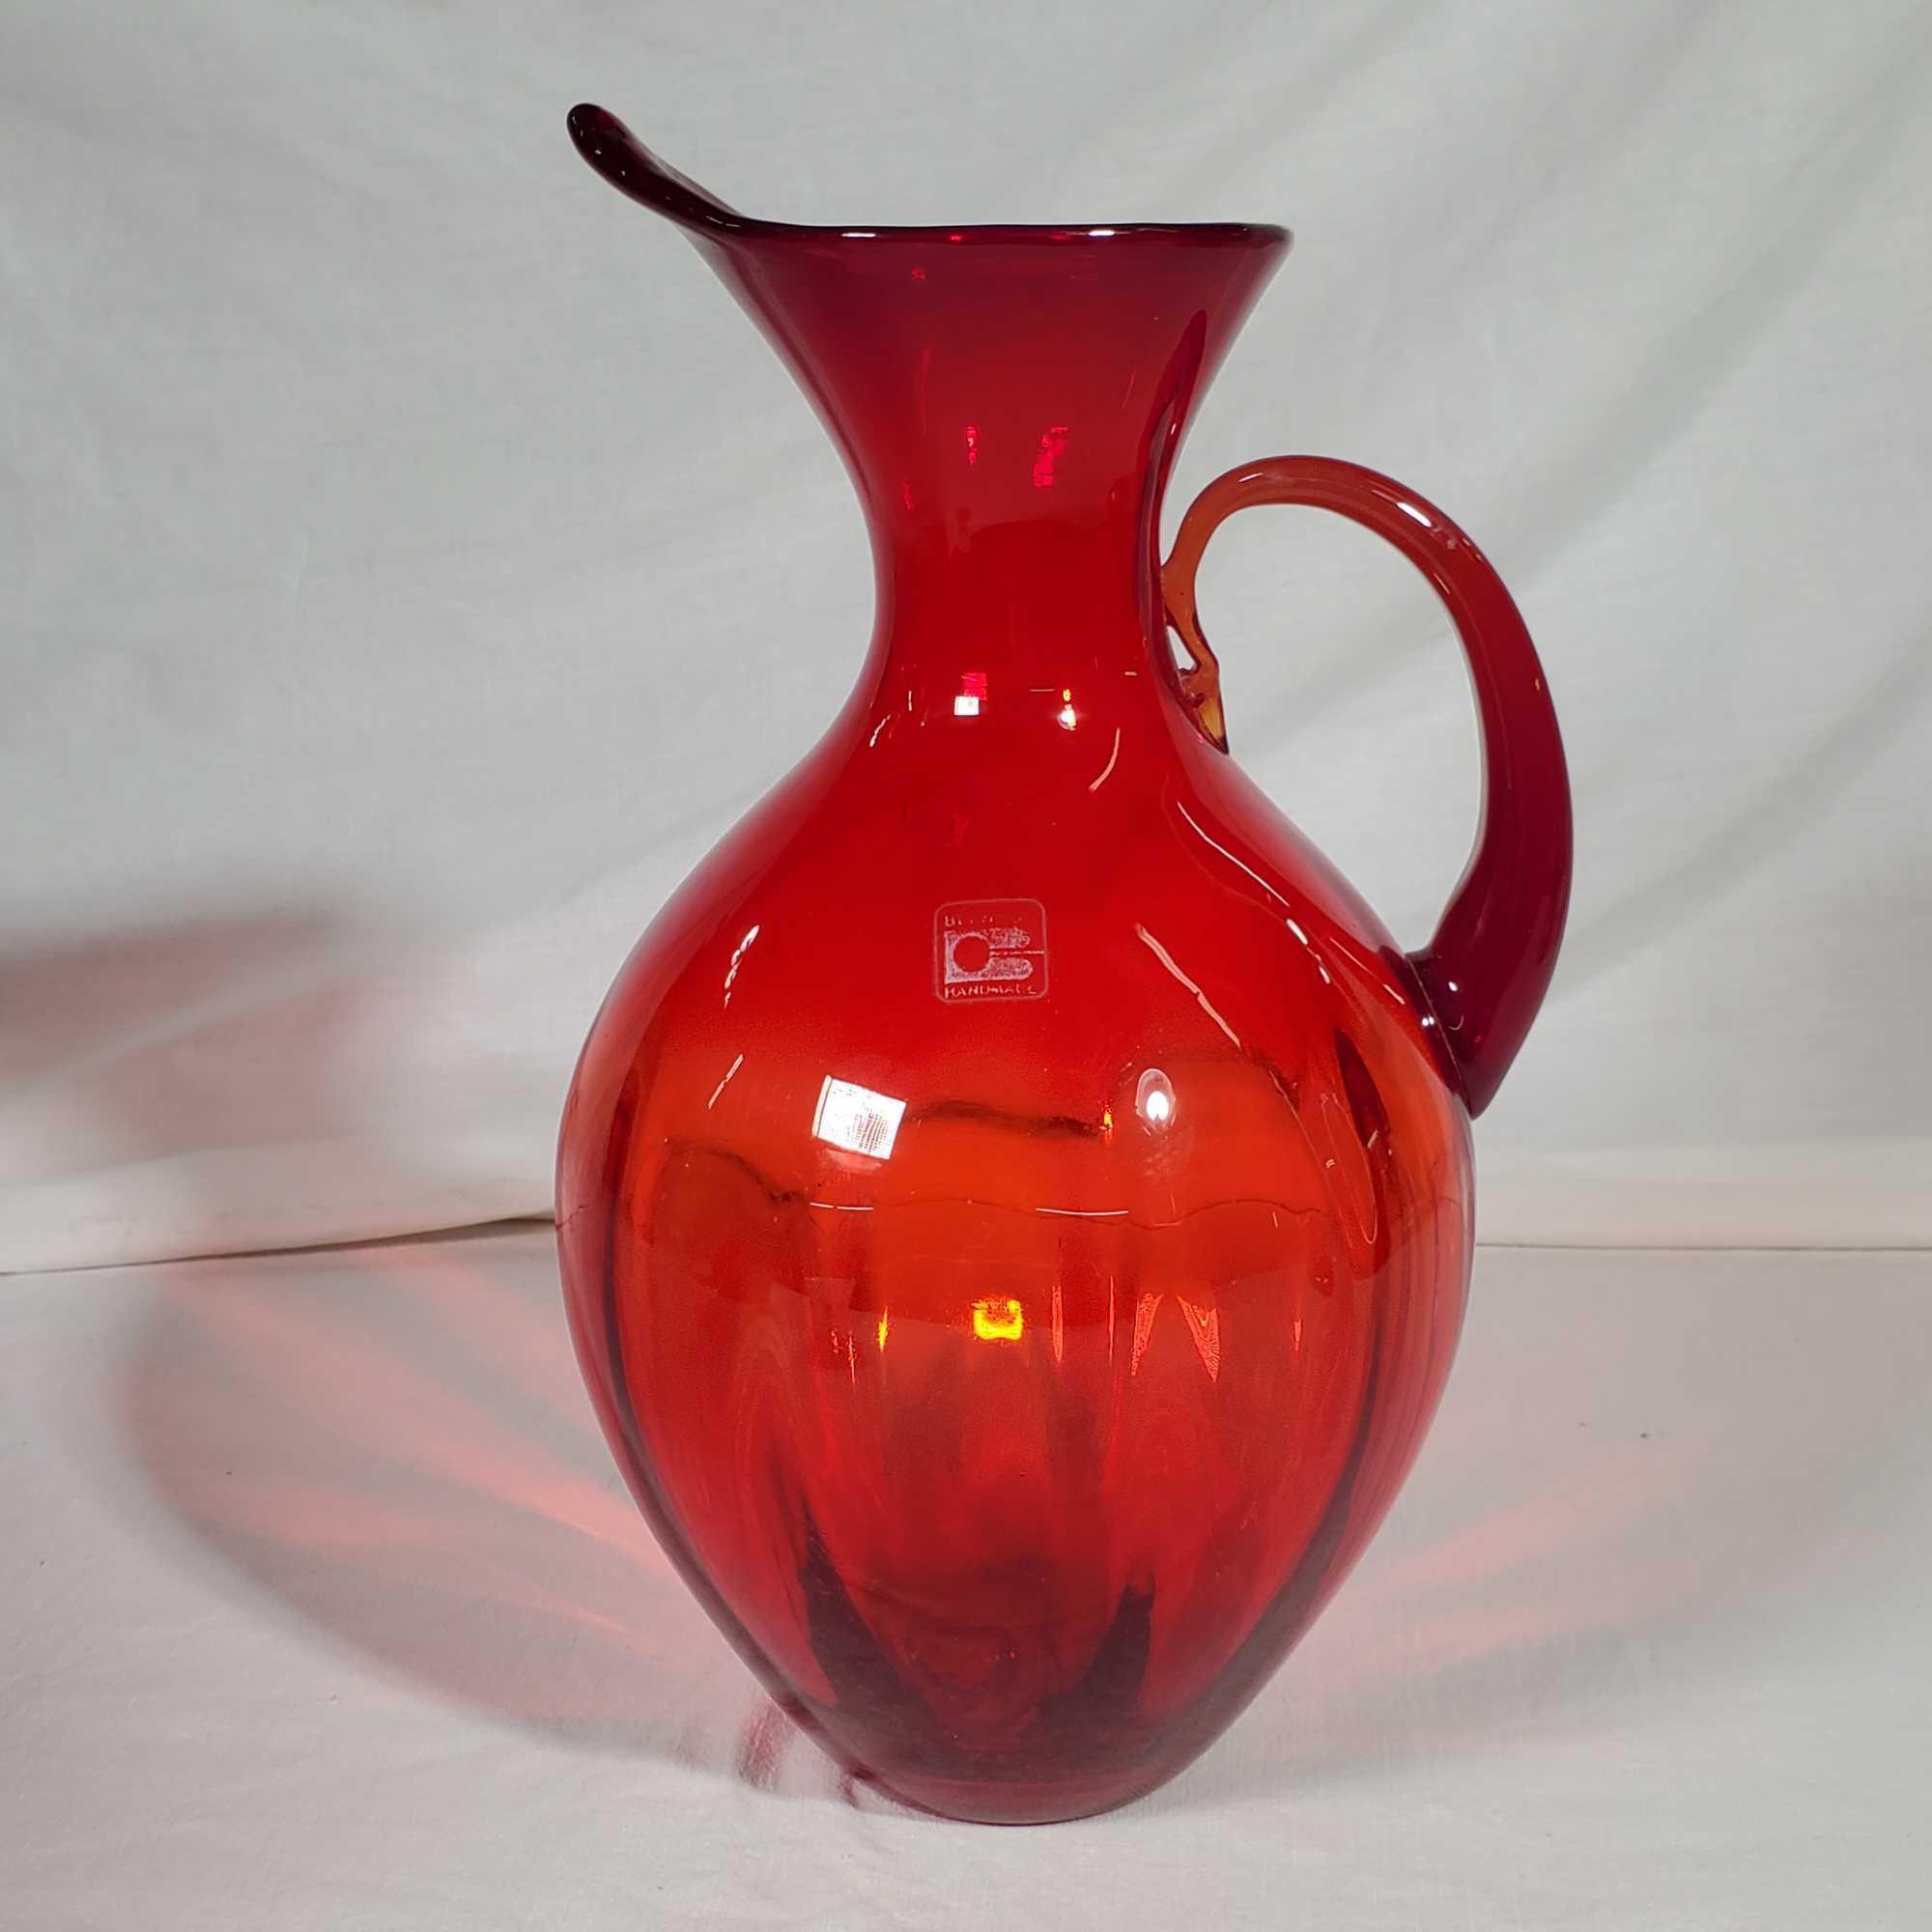 Vintage Red Blenko Art Glass Vases and Ewer